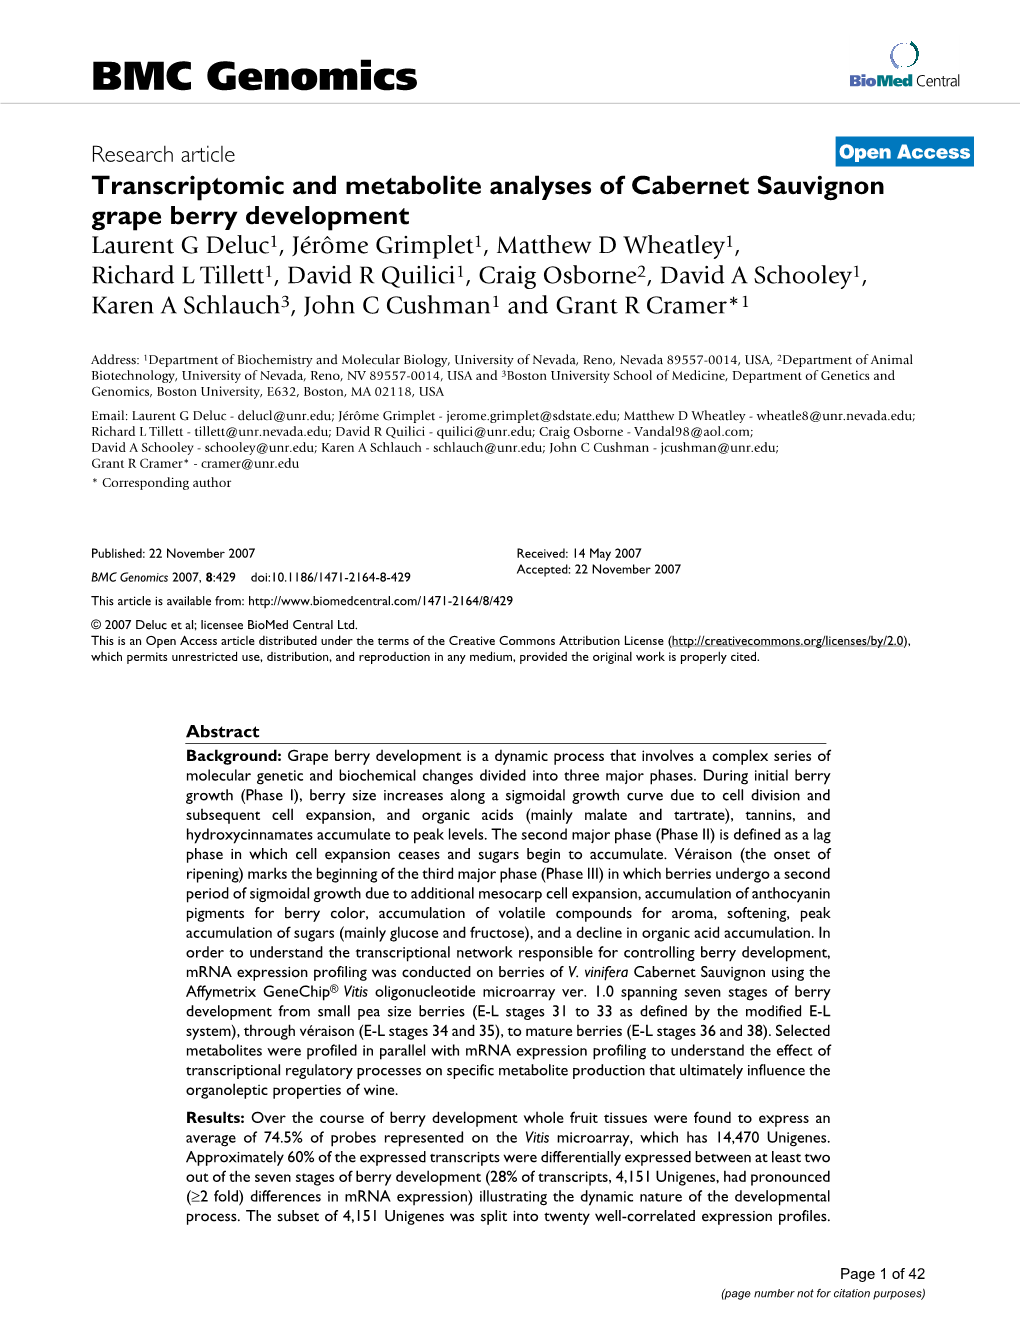 Transcriptomic and Metabolite Analyses of Cabernet Sauvignon